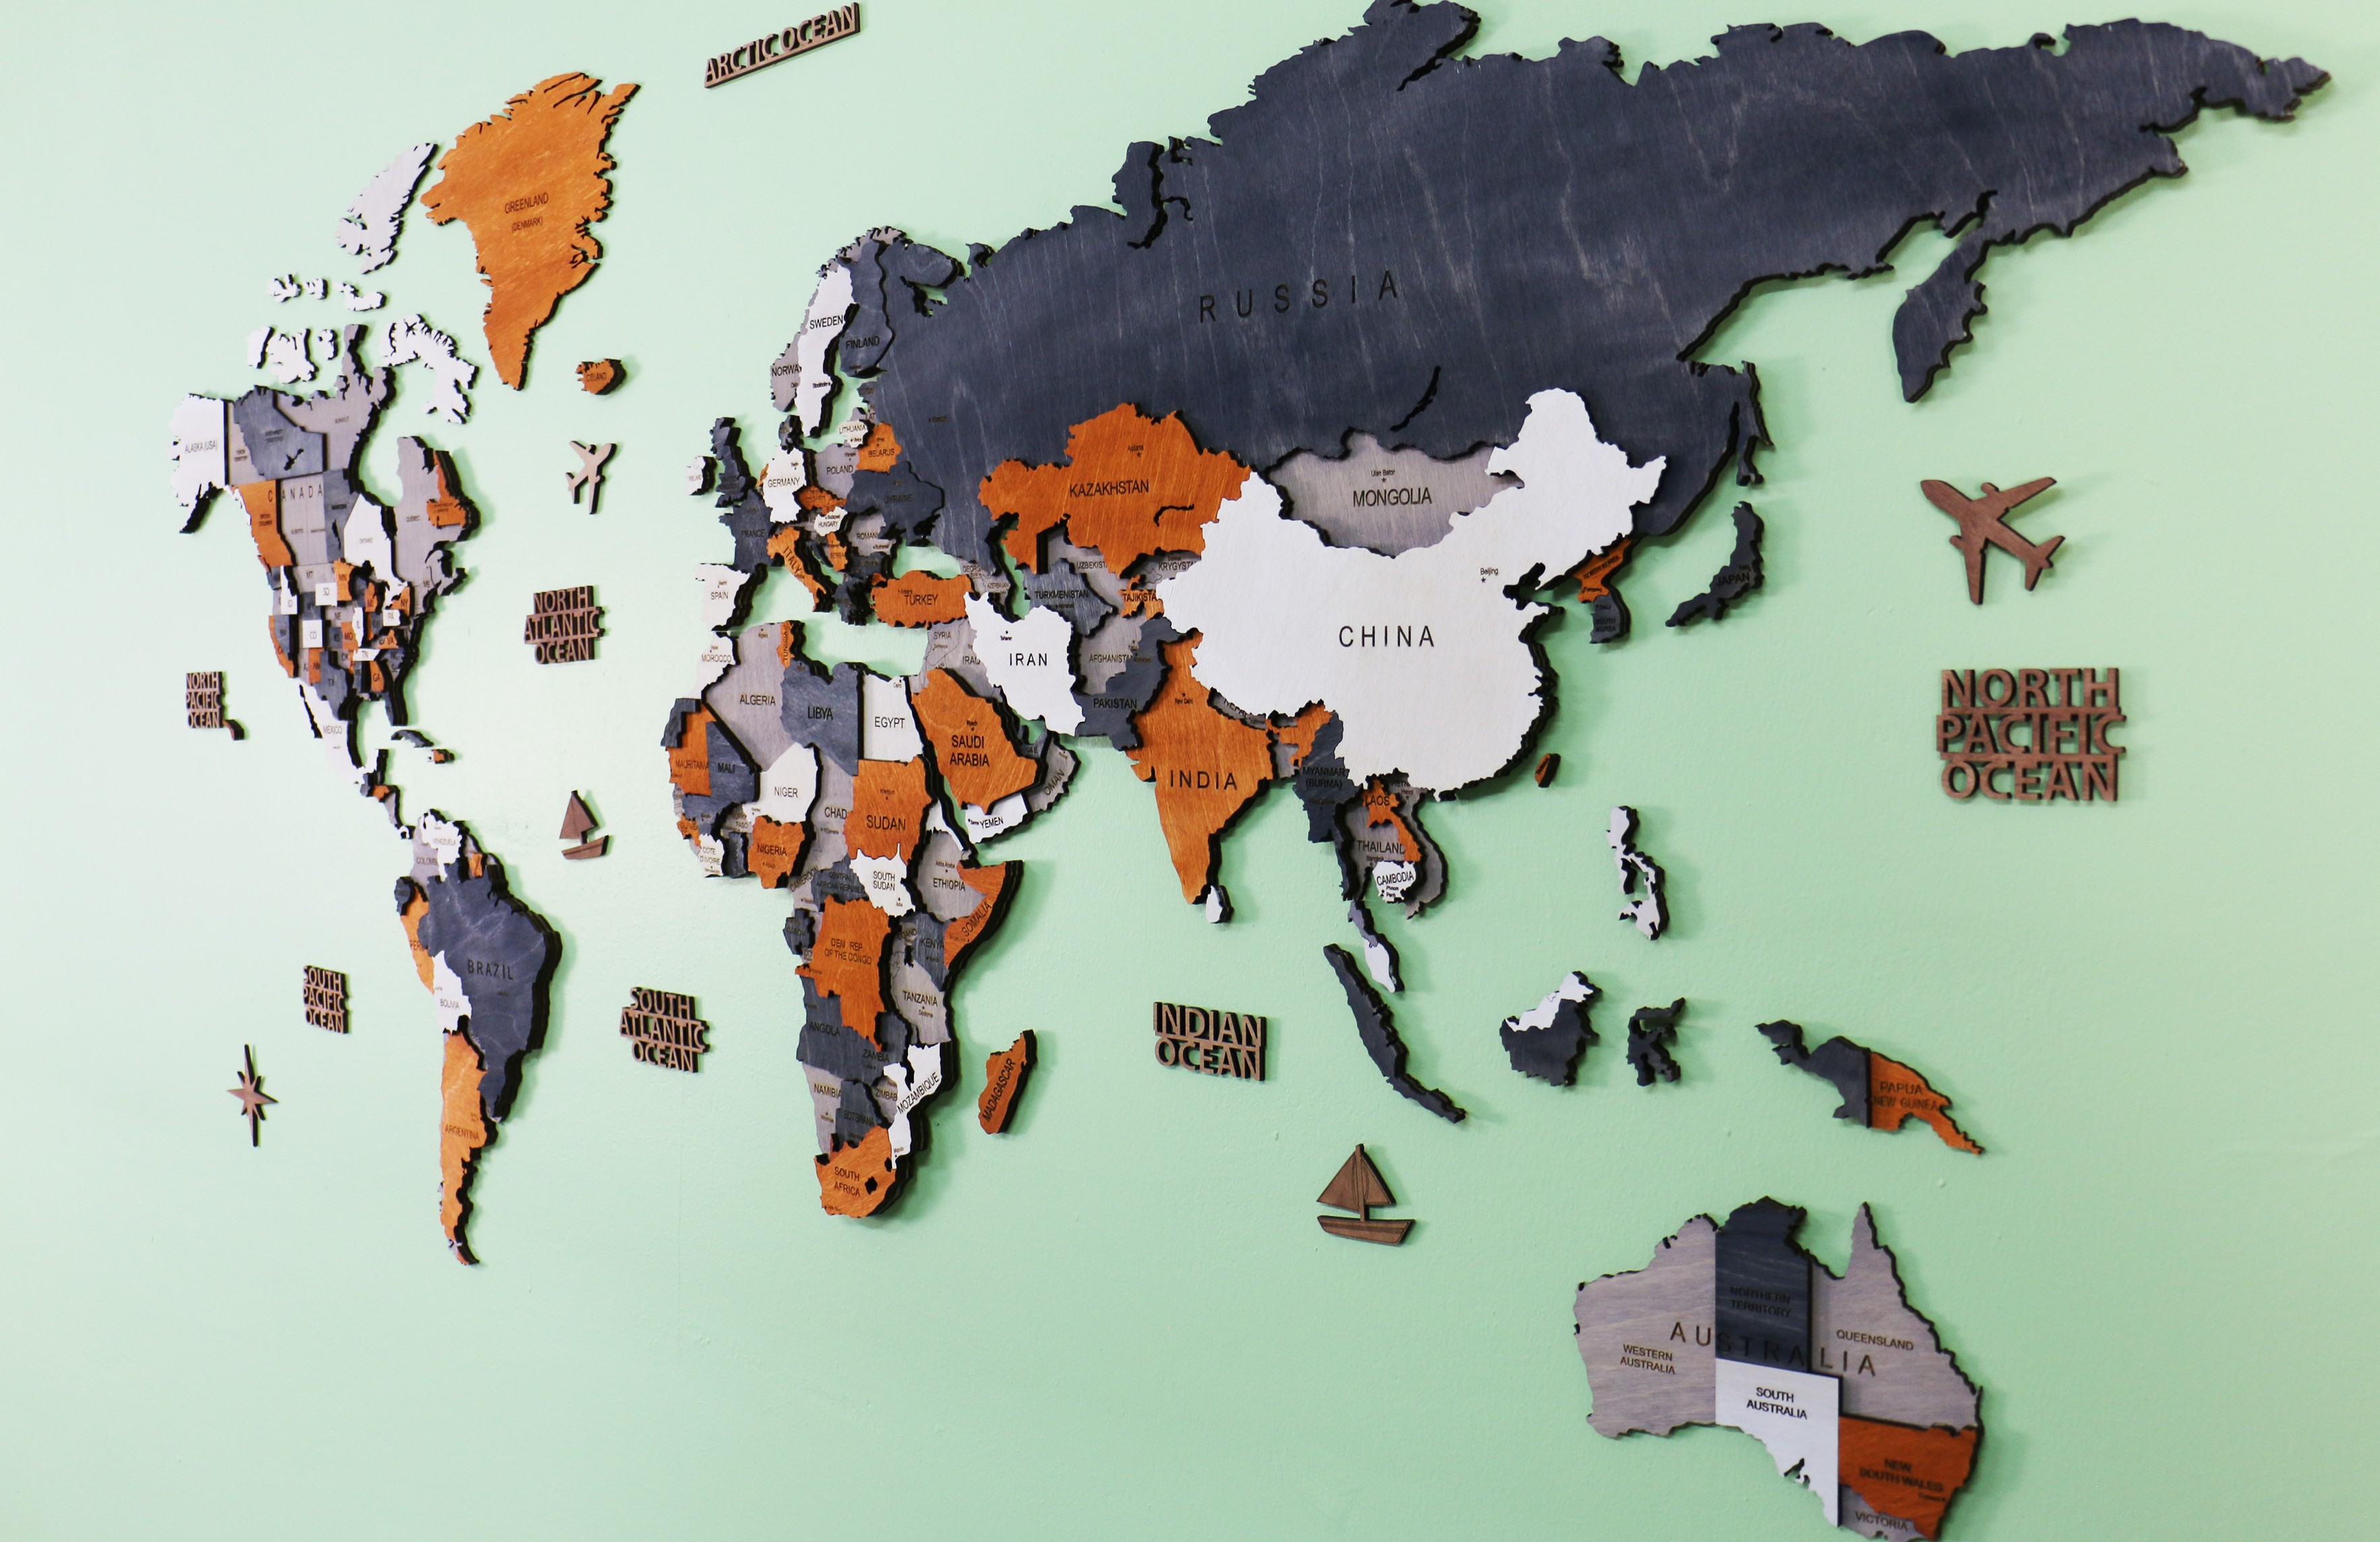 516 - Ahşap Dünya Haritası (Turuncu)